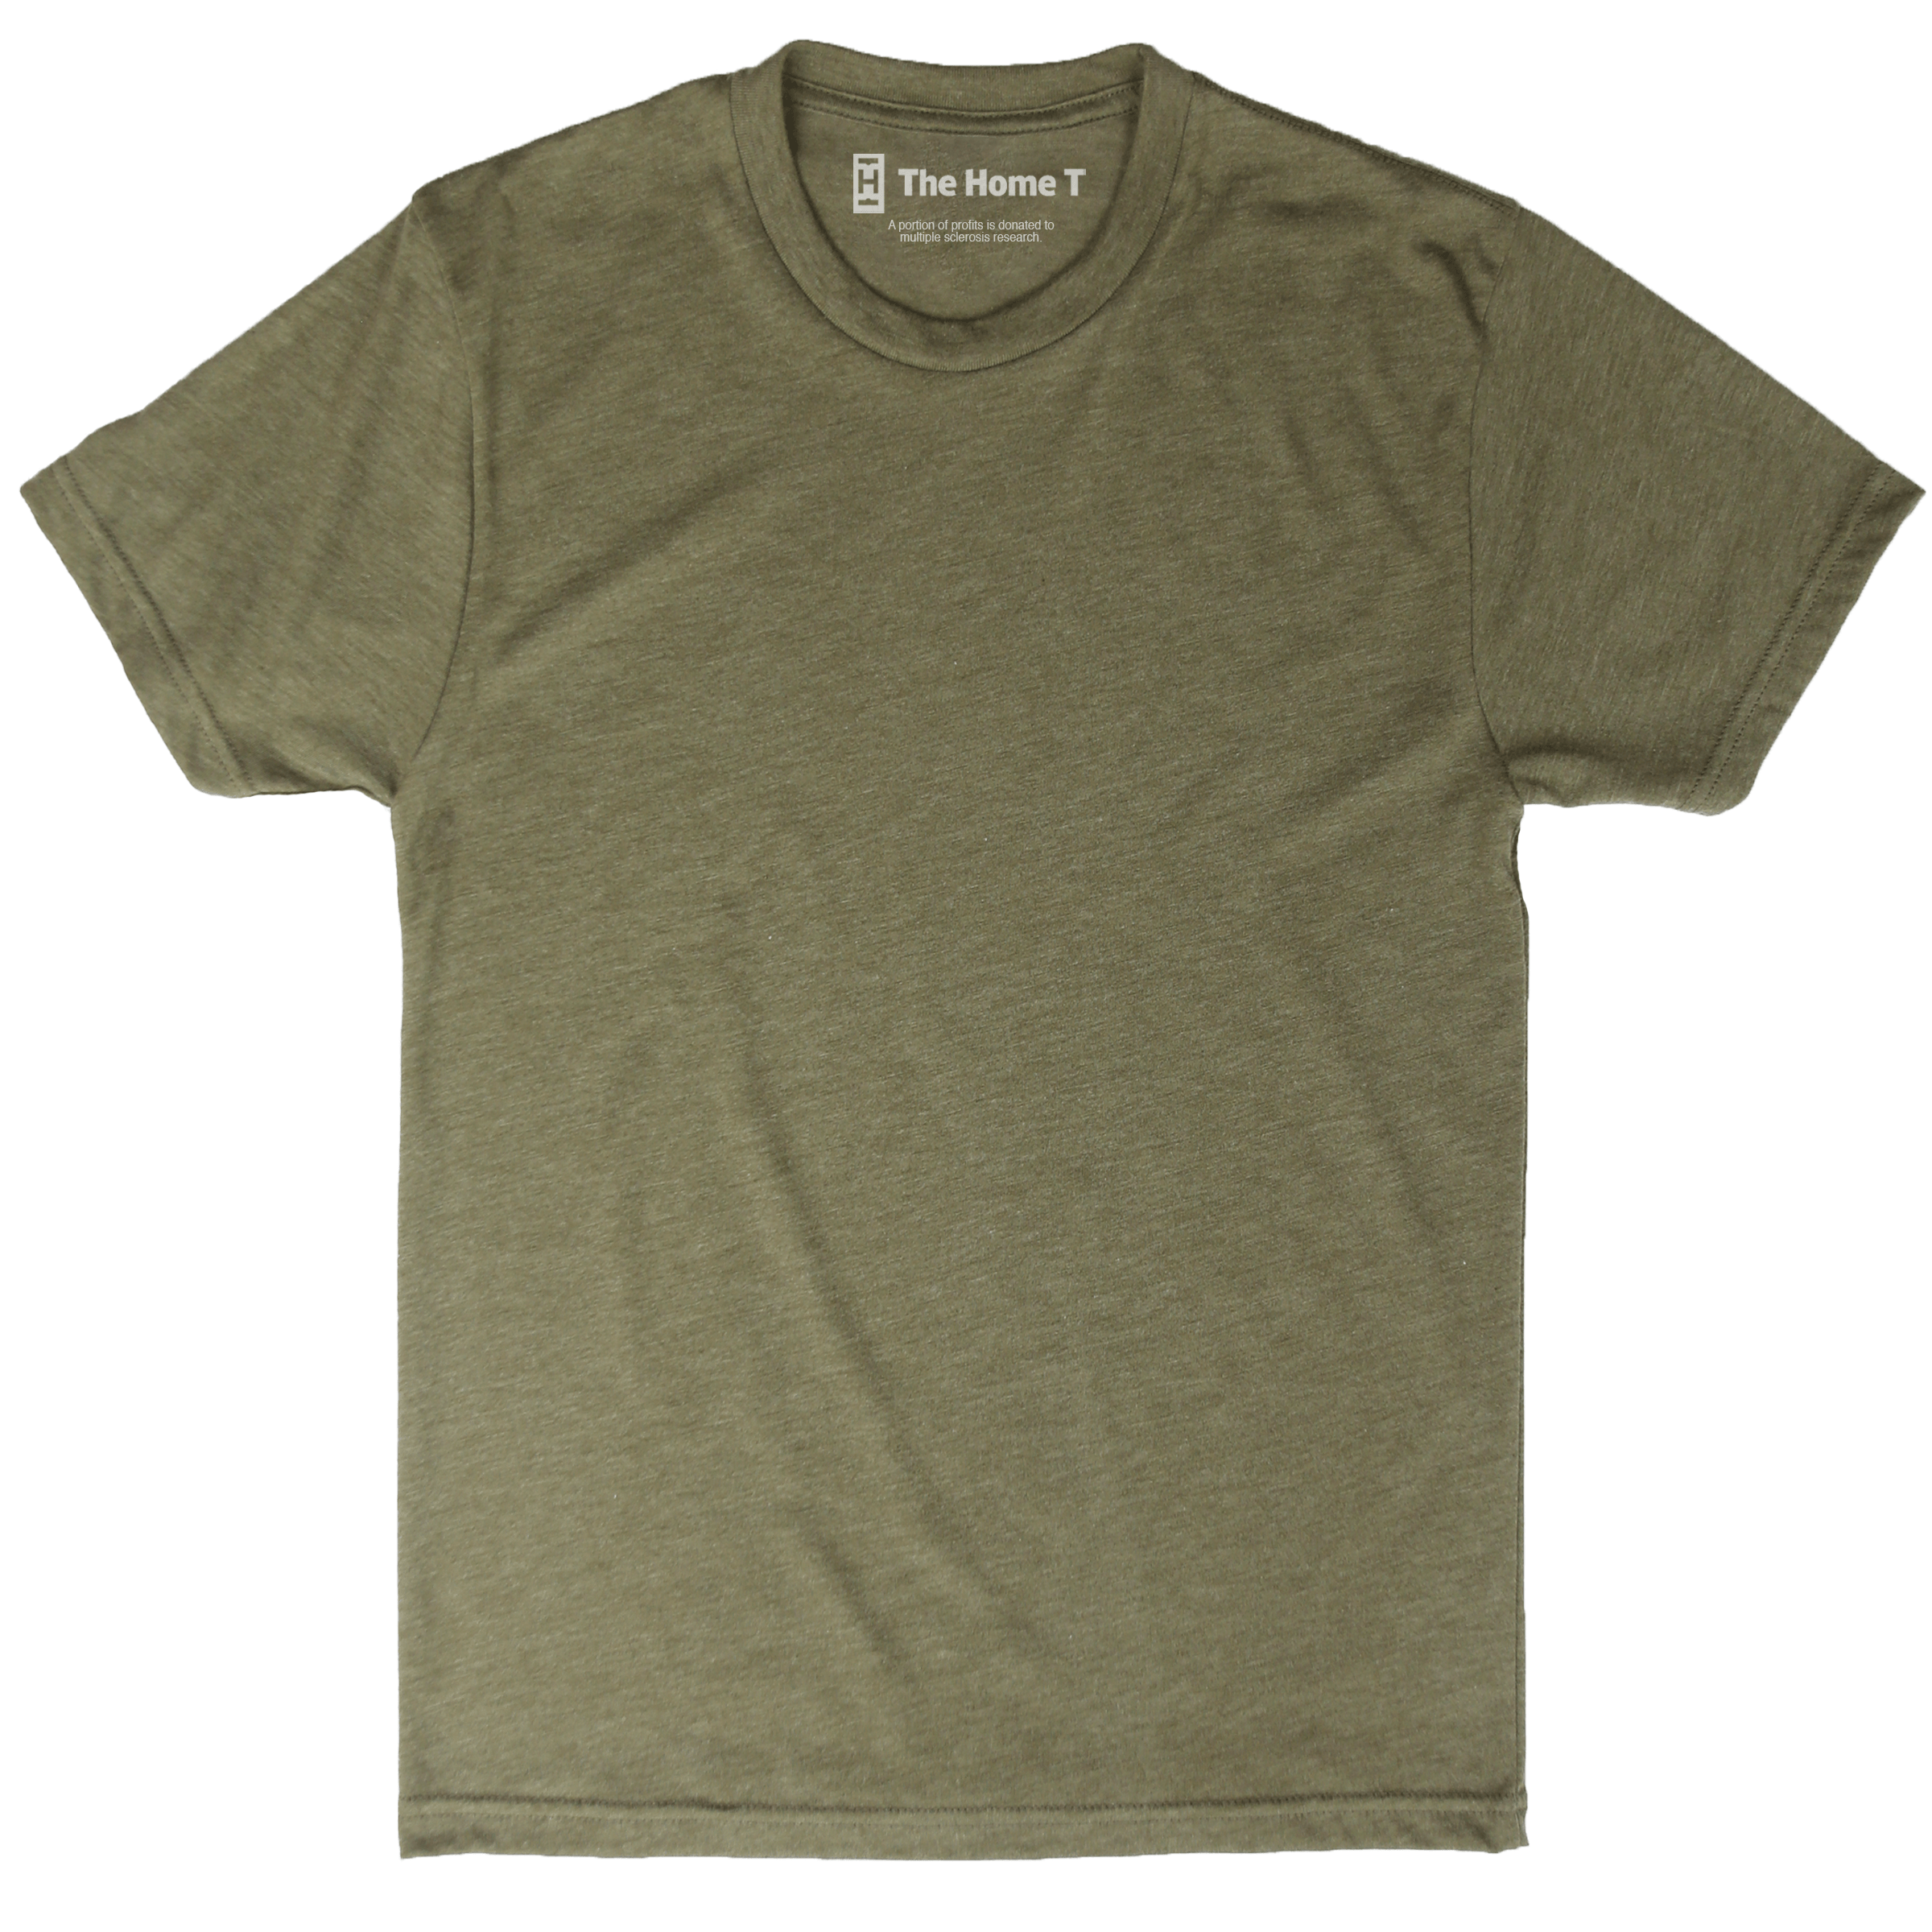 Army Green basic crew neck shirt